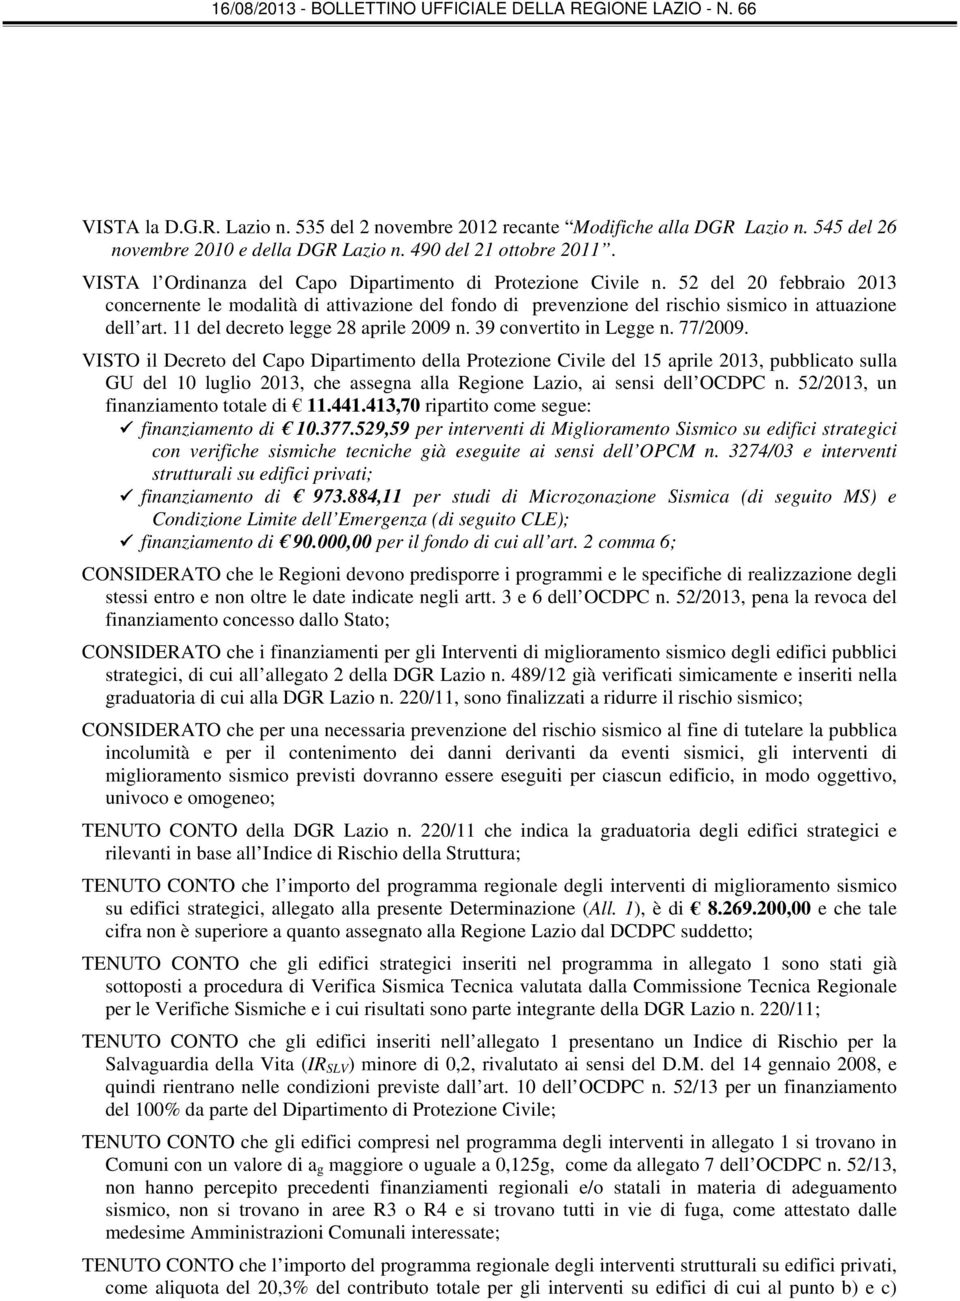 11 del decreto legge 28 aprile 2009 n. 39 convertito in Legge n. 77/2009.